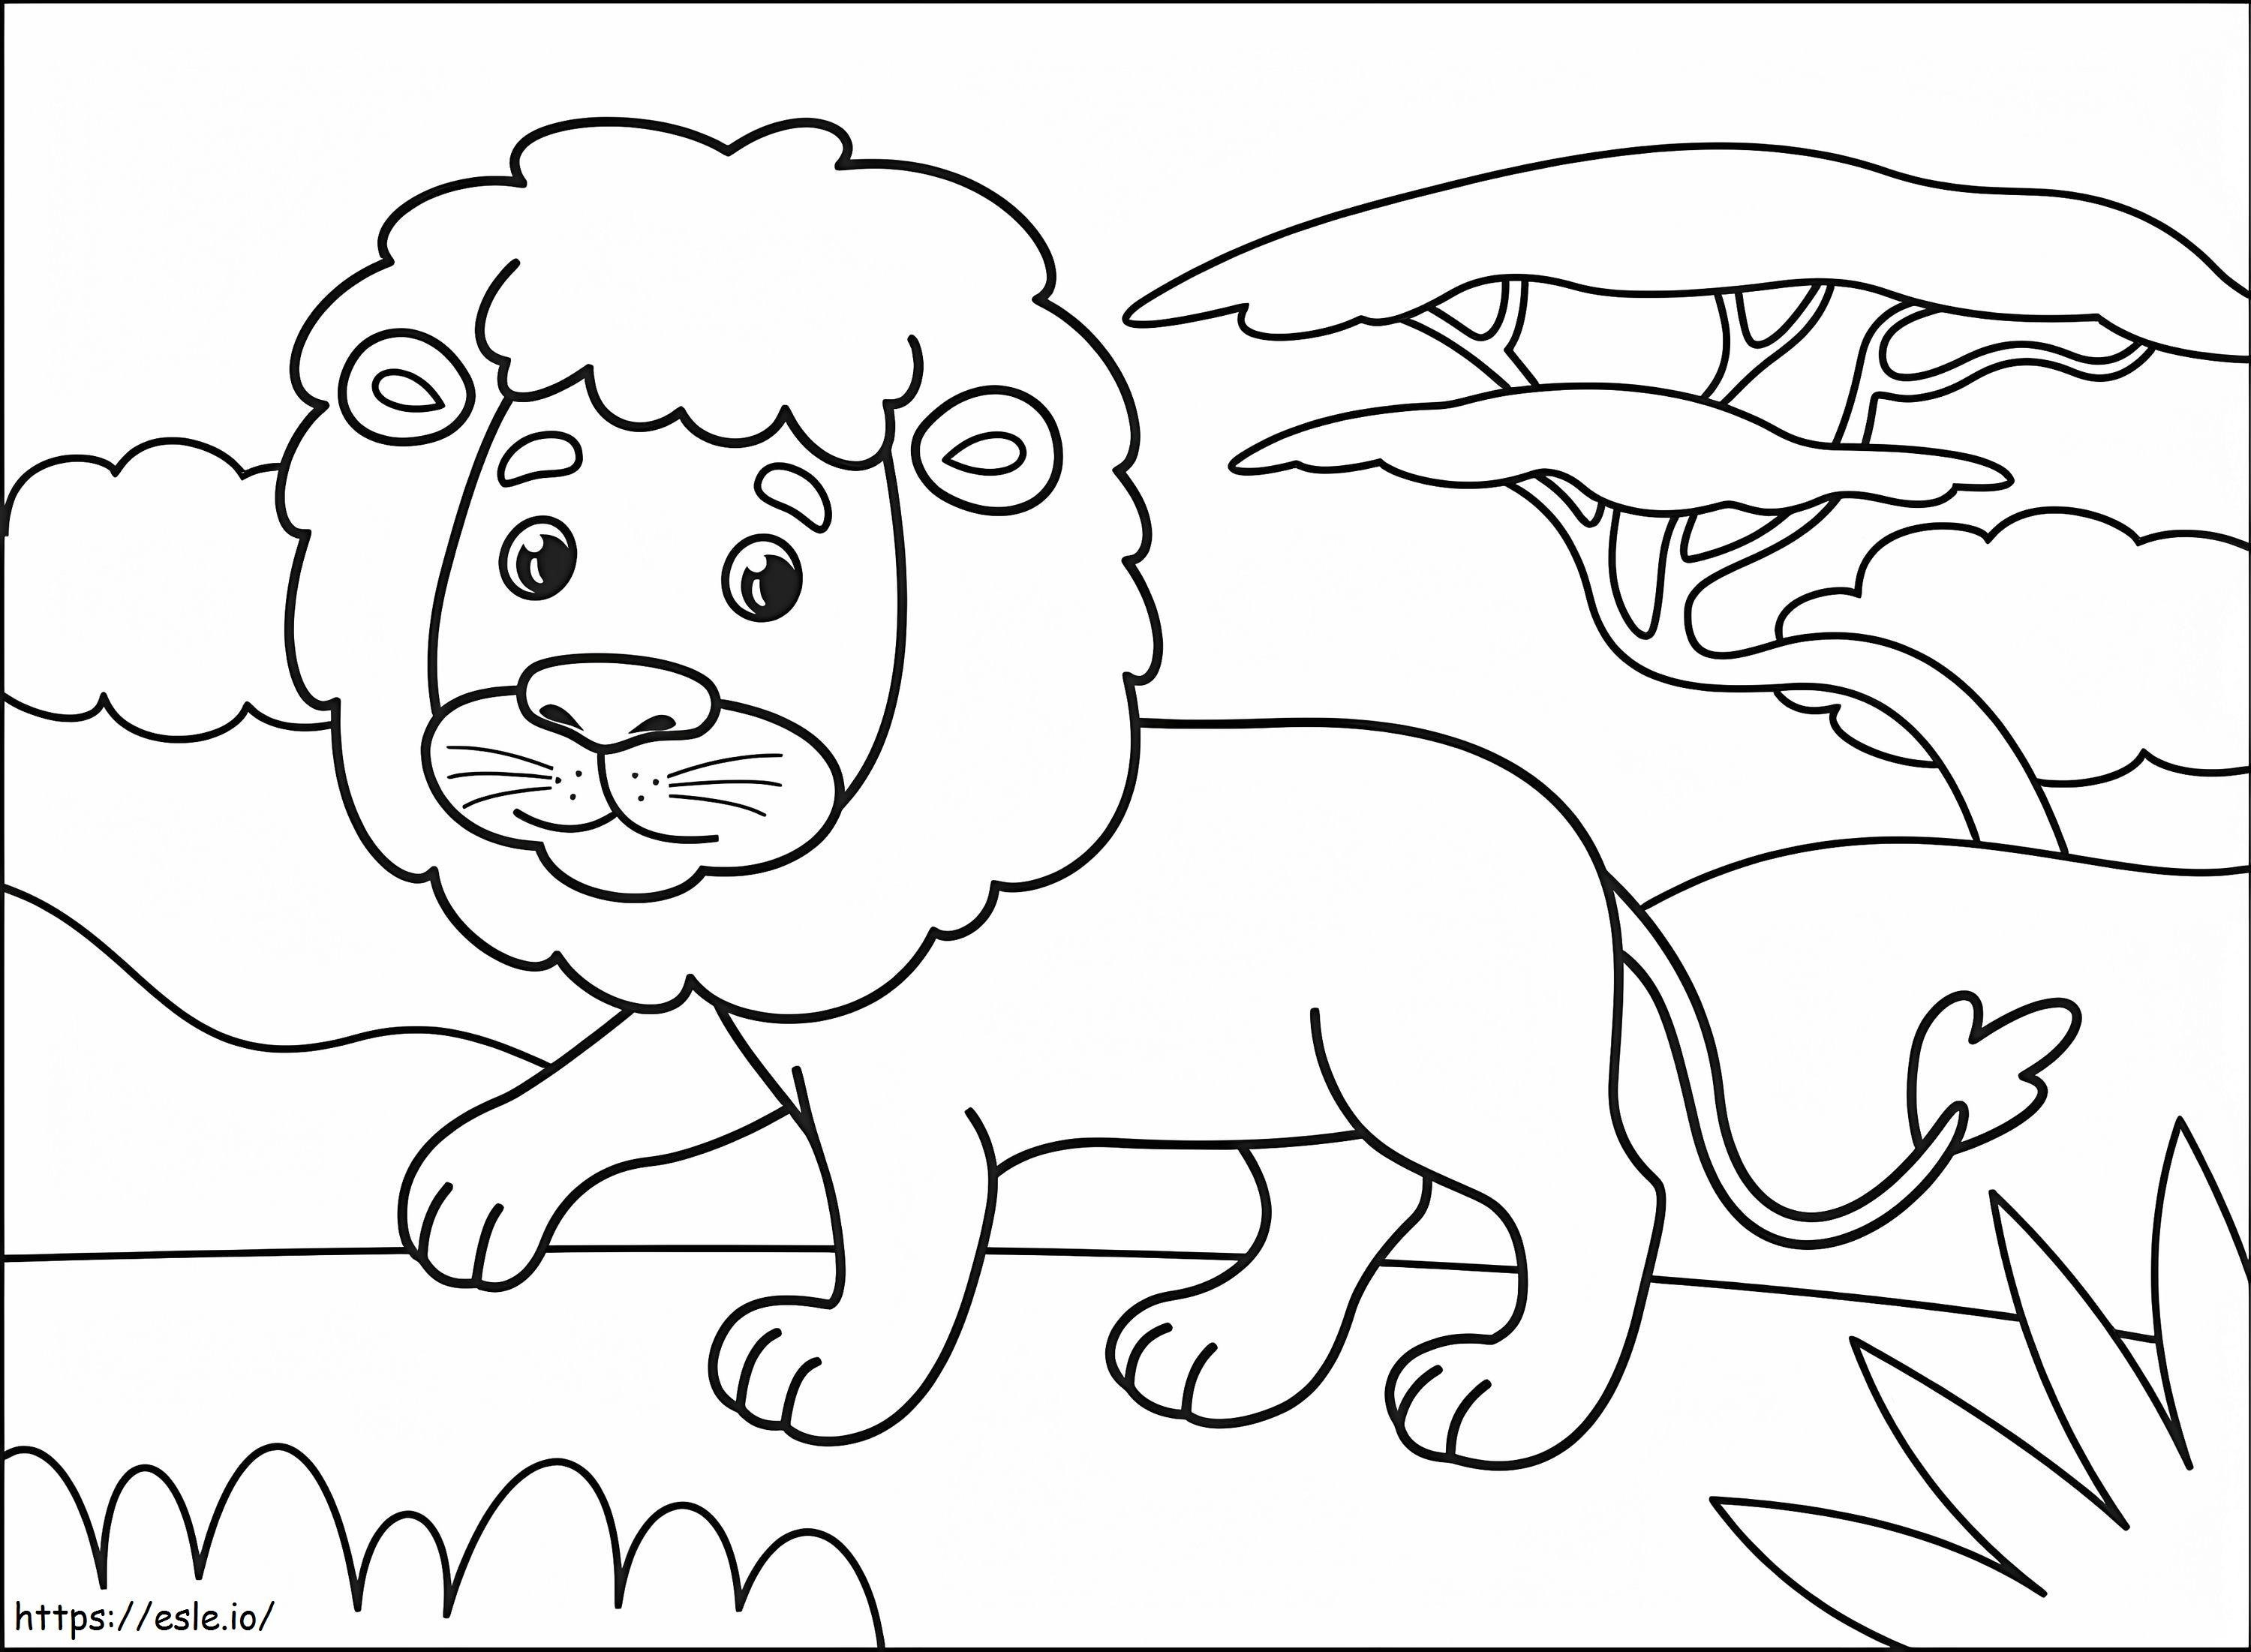 A Cute Lion coloring page